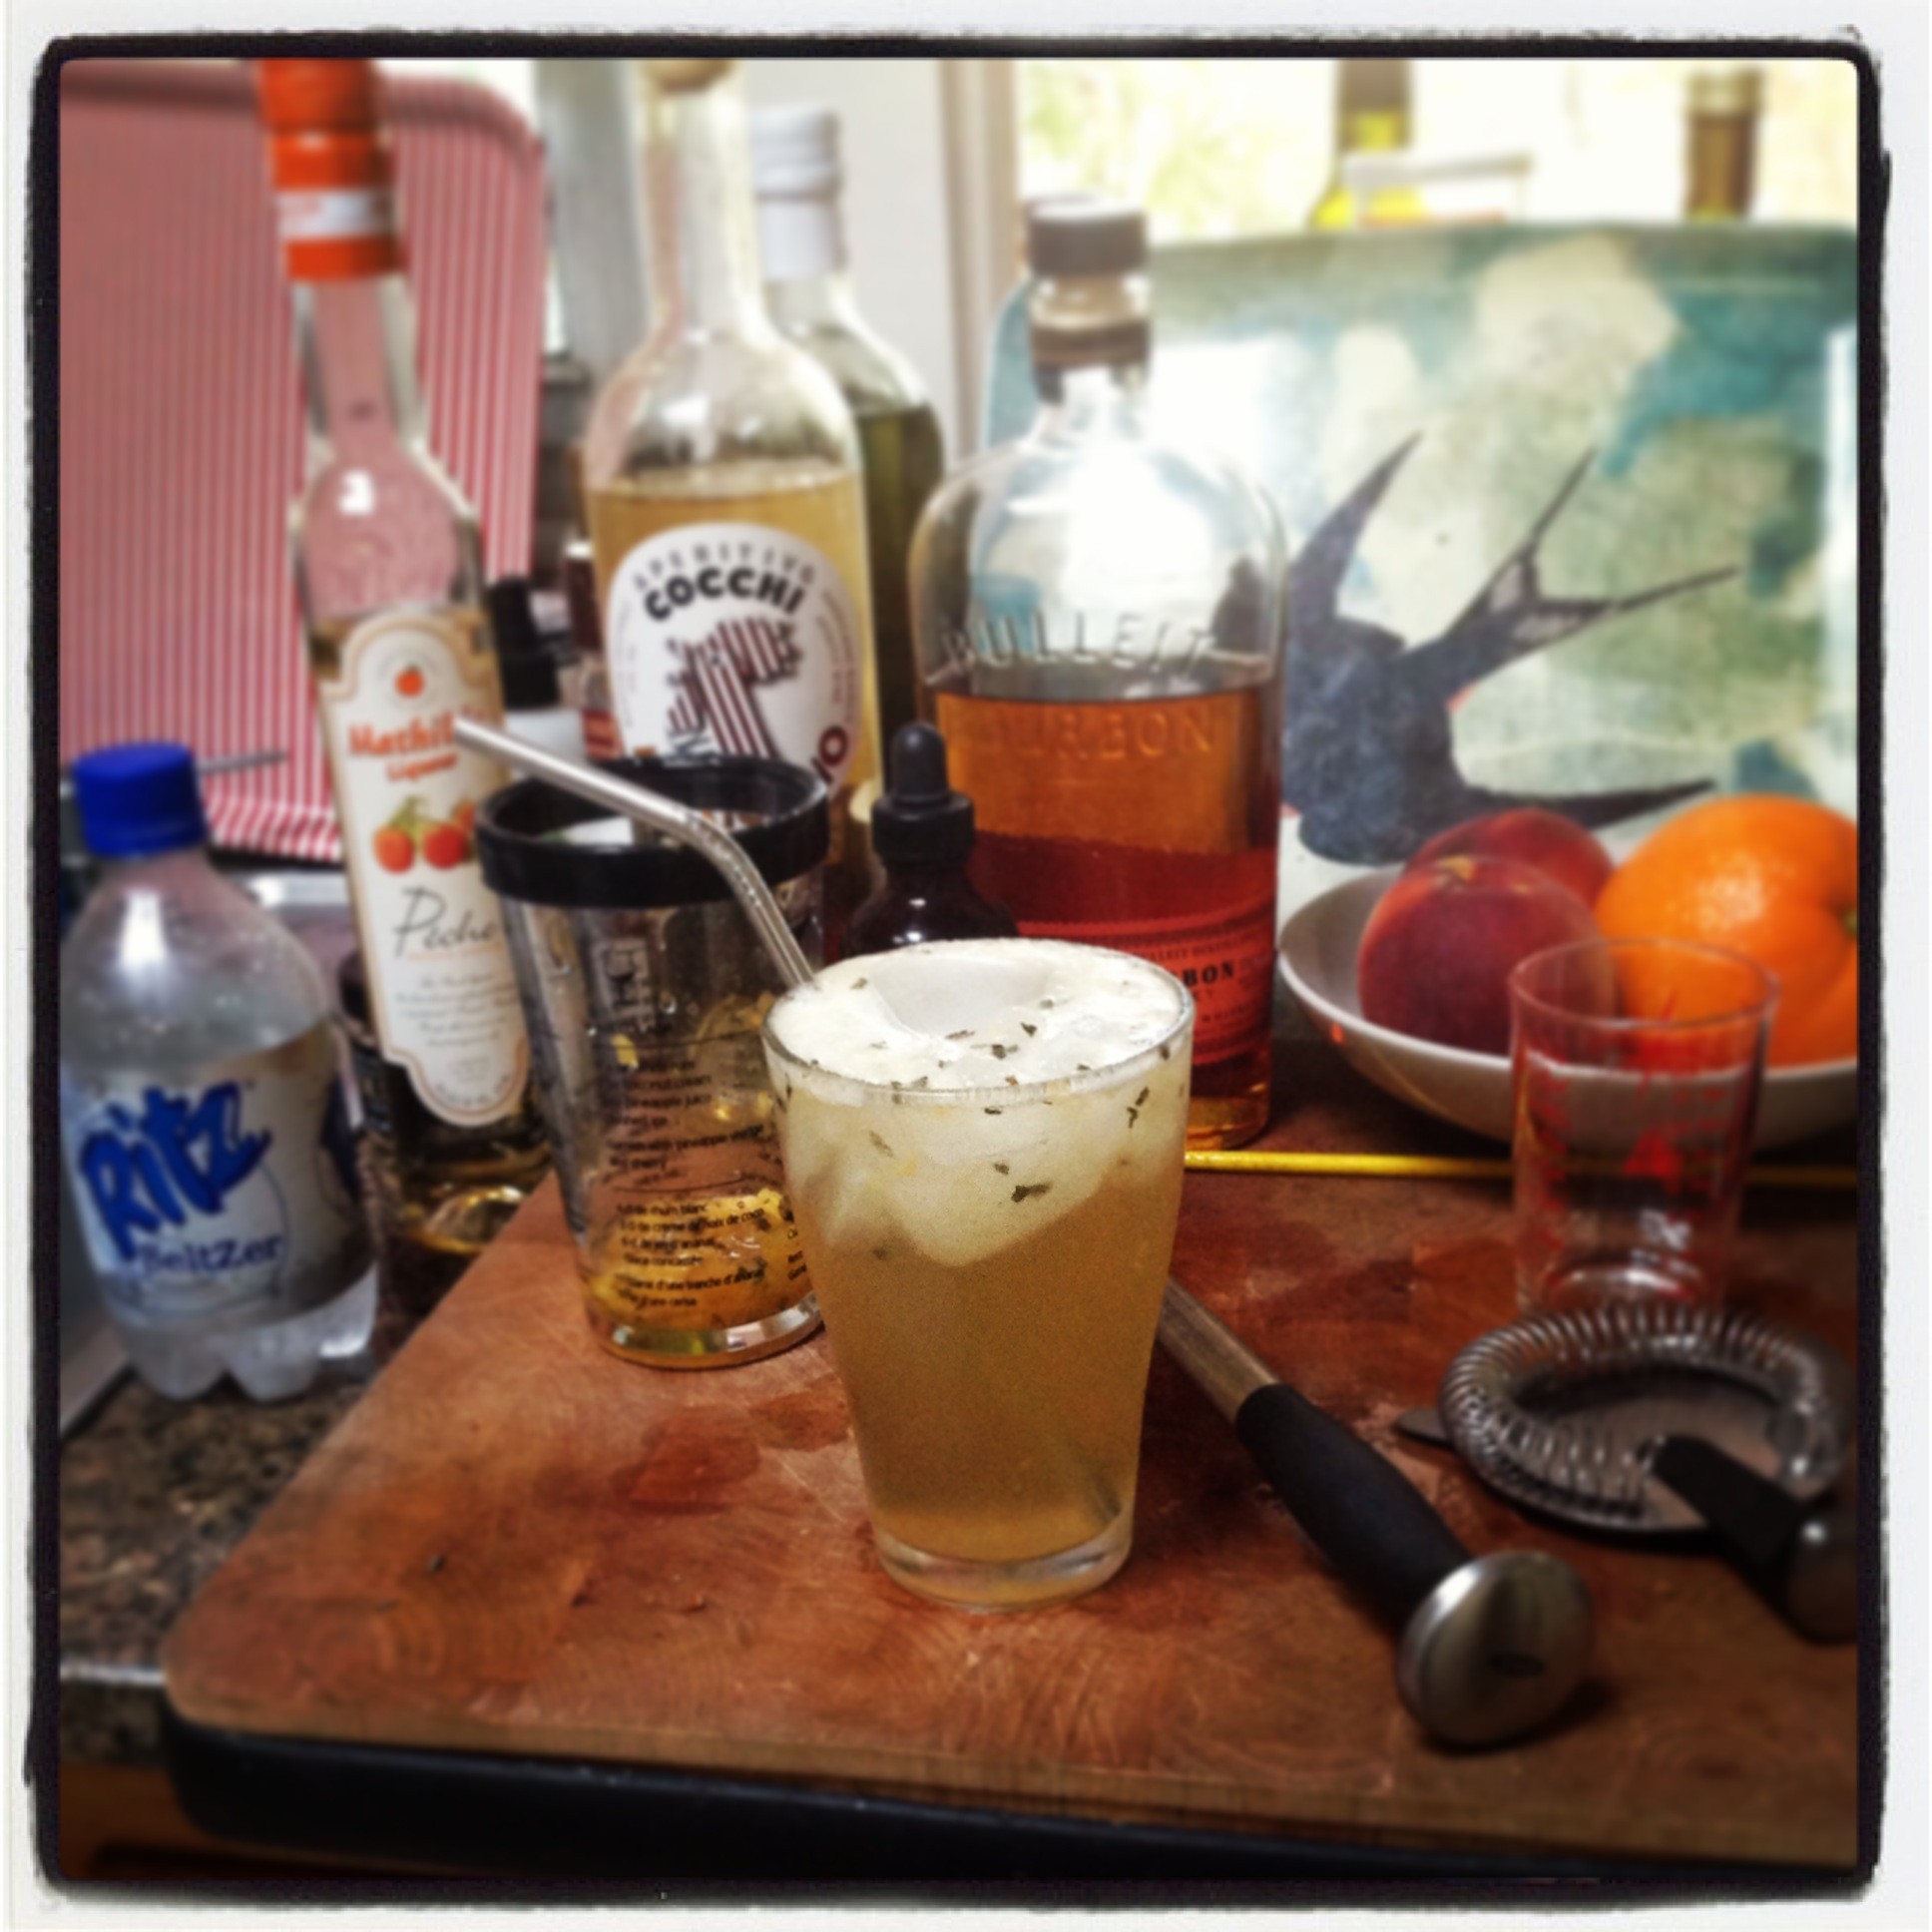 Lemme smash it: Our April Remix cocktail, transformed into a lighter, longer drink suitable for sipping.